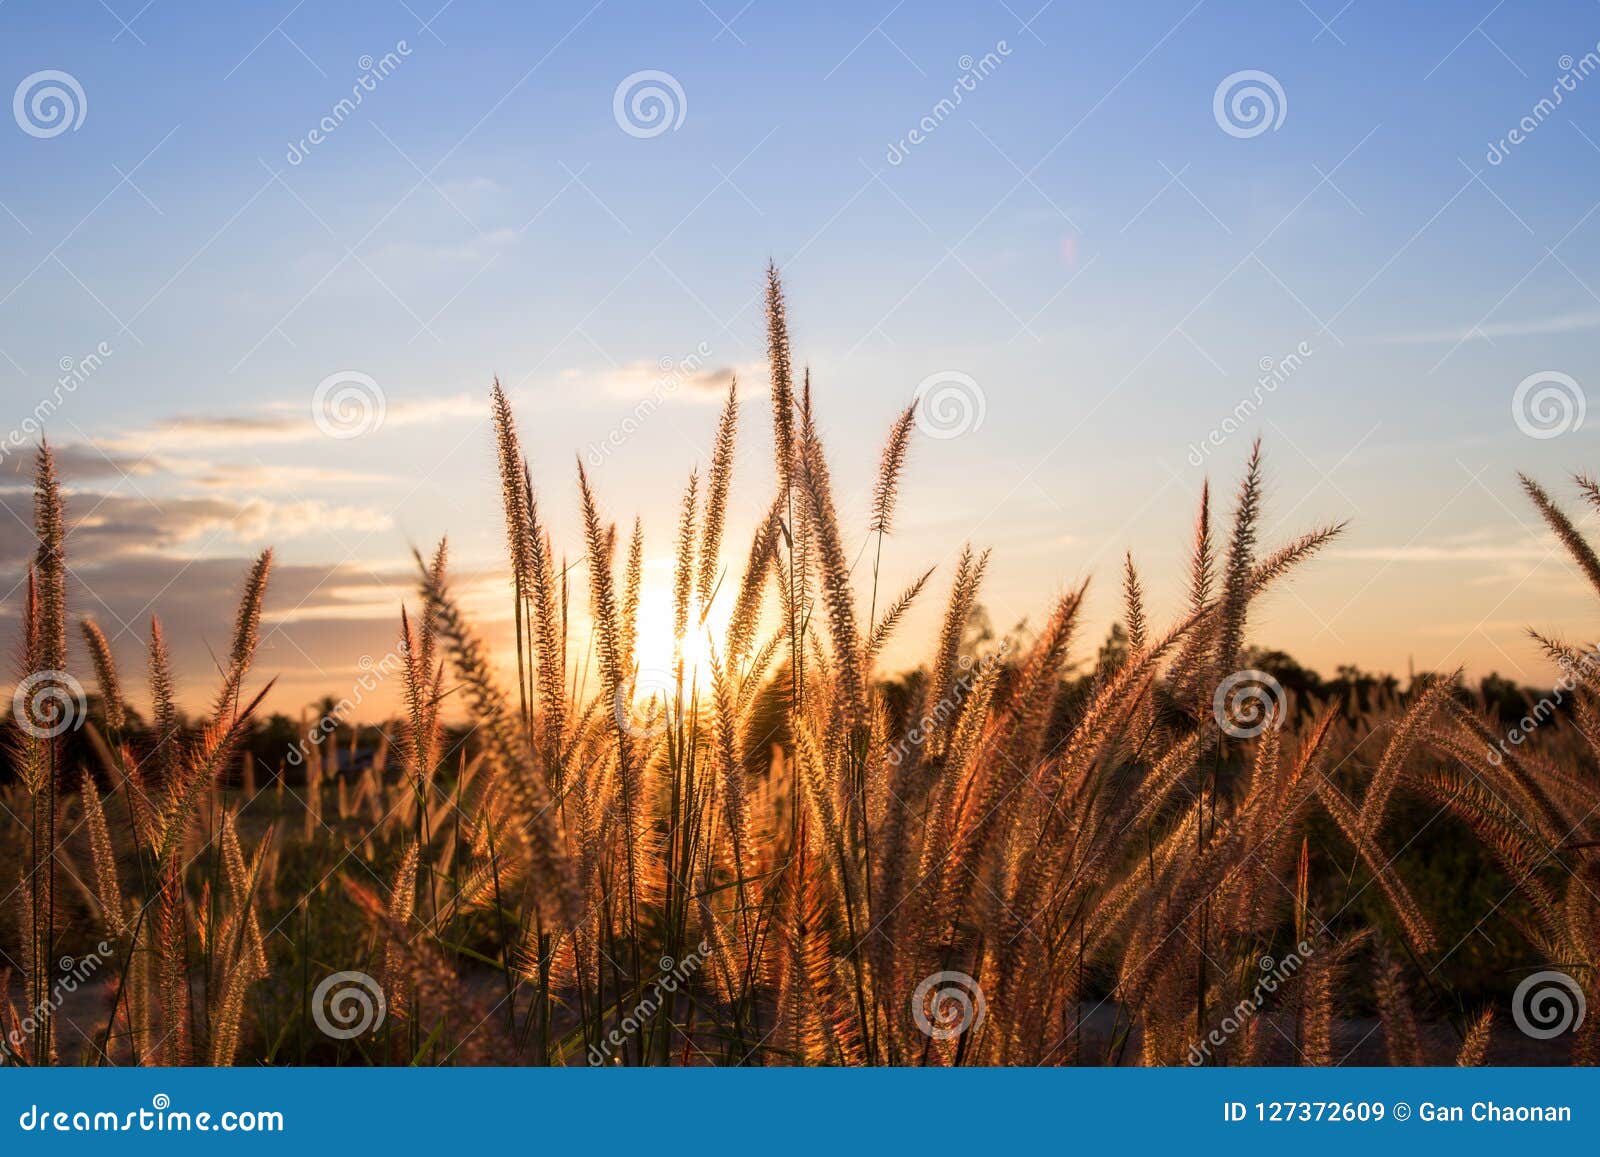 Golden Grass, Sunset Background. Stock Image - Image of fresh, design